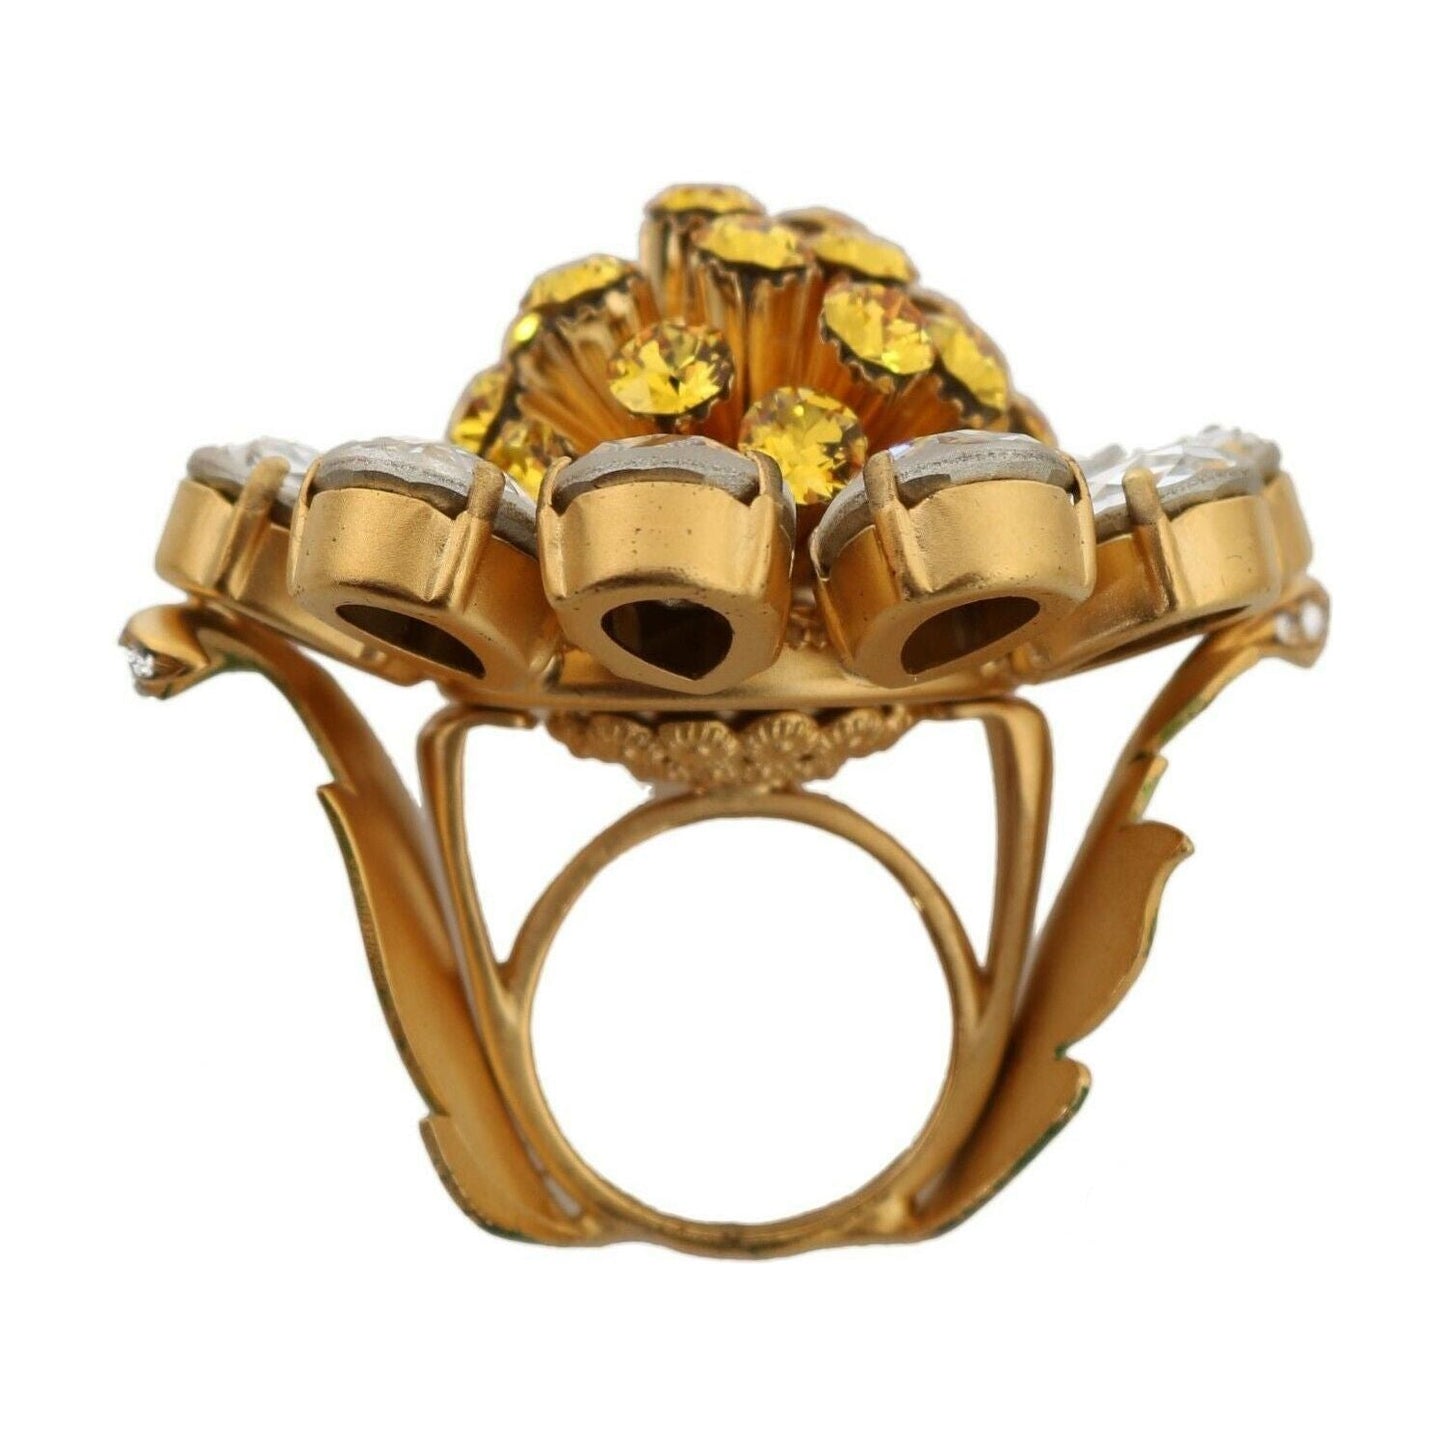 Dolce & Gabbana Crystal Flower Statement Ring Size US 7.5 gold-brass-yellow-crystal-flower-ring s-l1600-23-1-819403b5-e0b.jpg